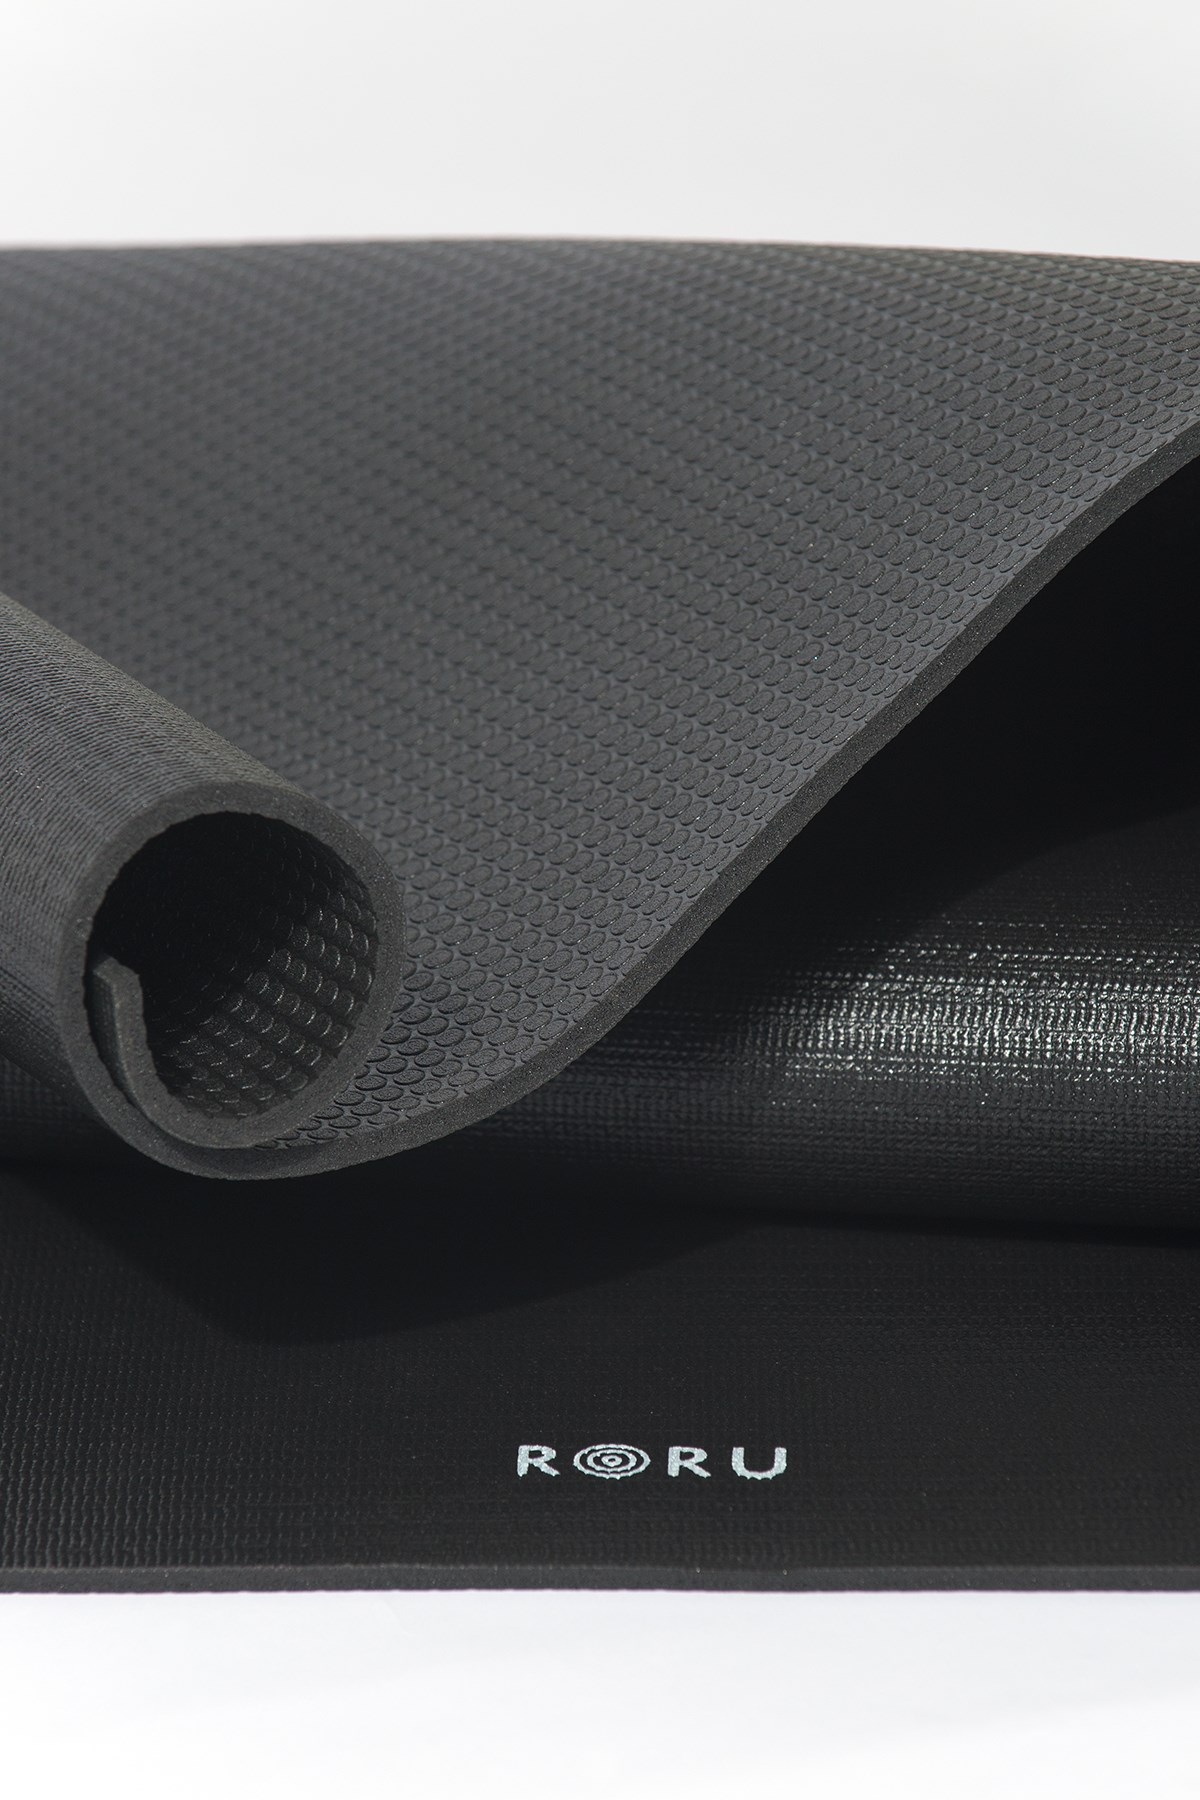 RORU Pro Serisi 6 mm Siyah Yoga Matı